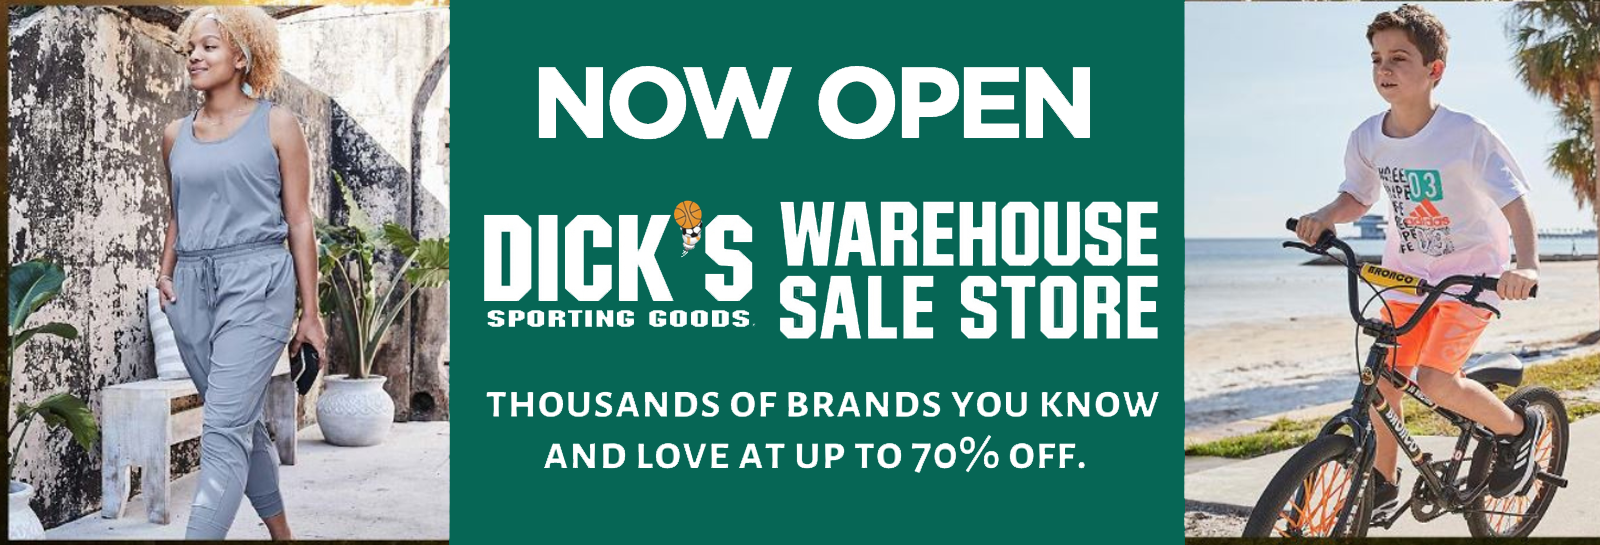 DICK'S Sporting Goods Warehouse Sale Store Now Open Website Banner